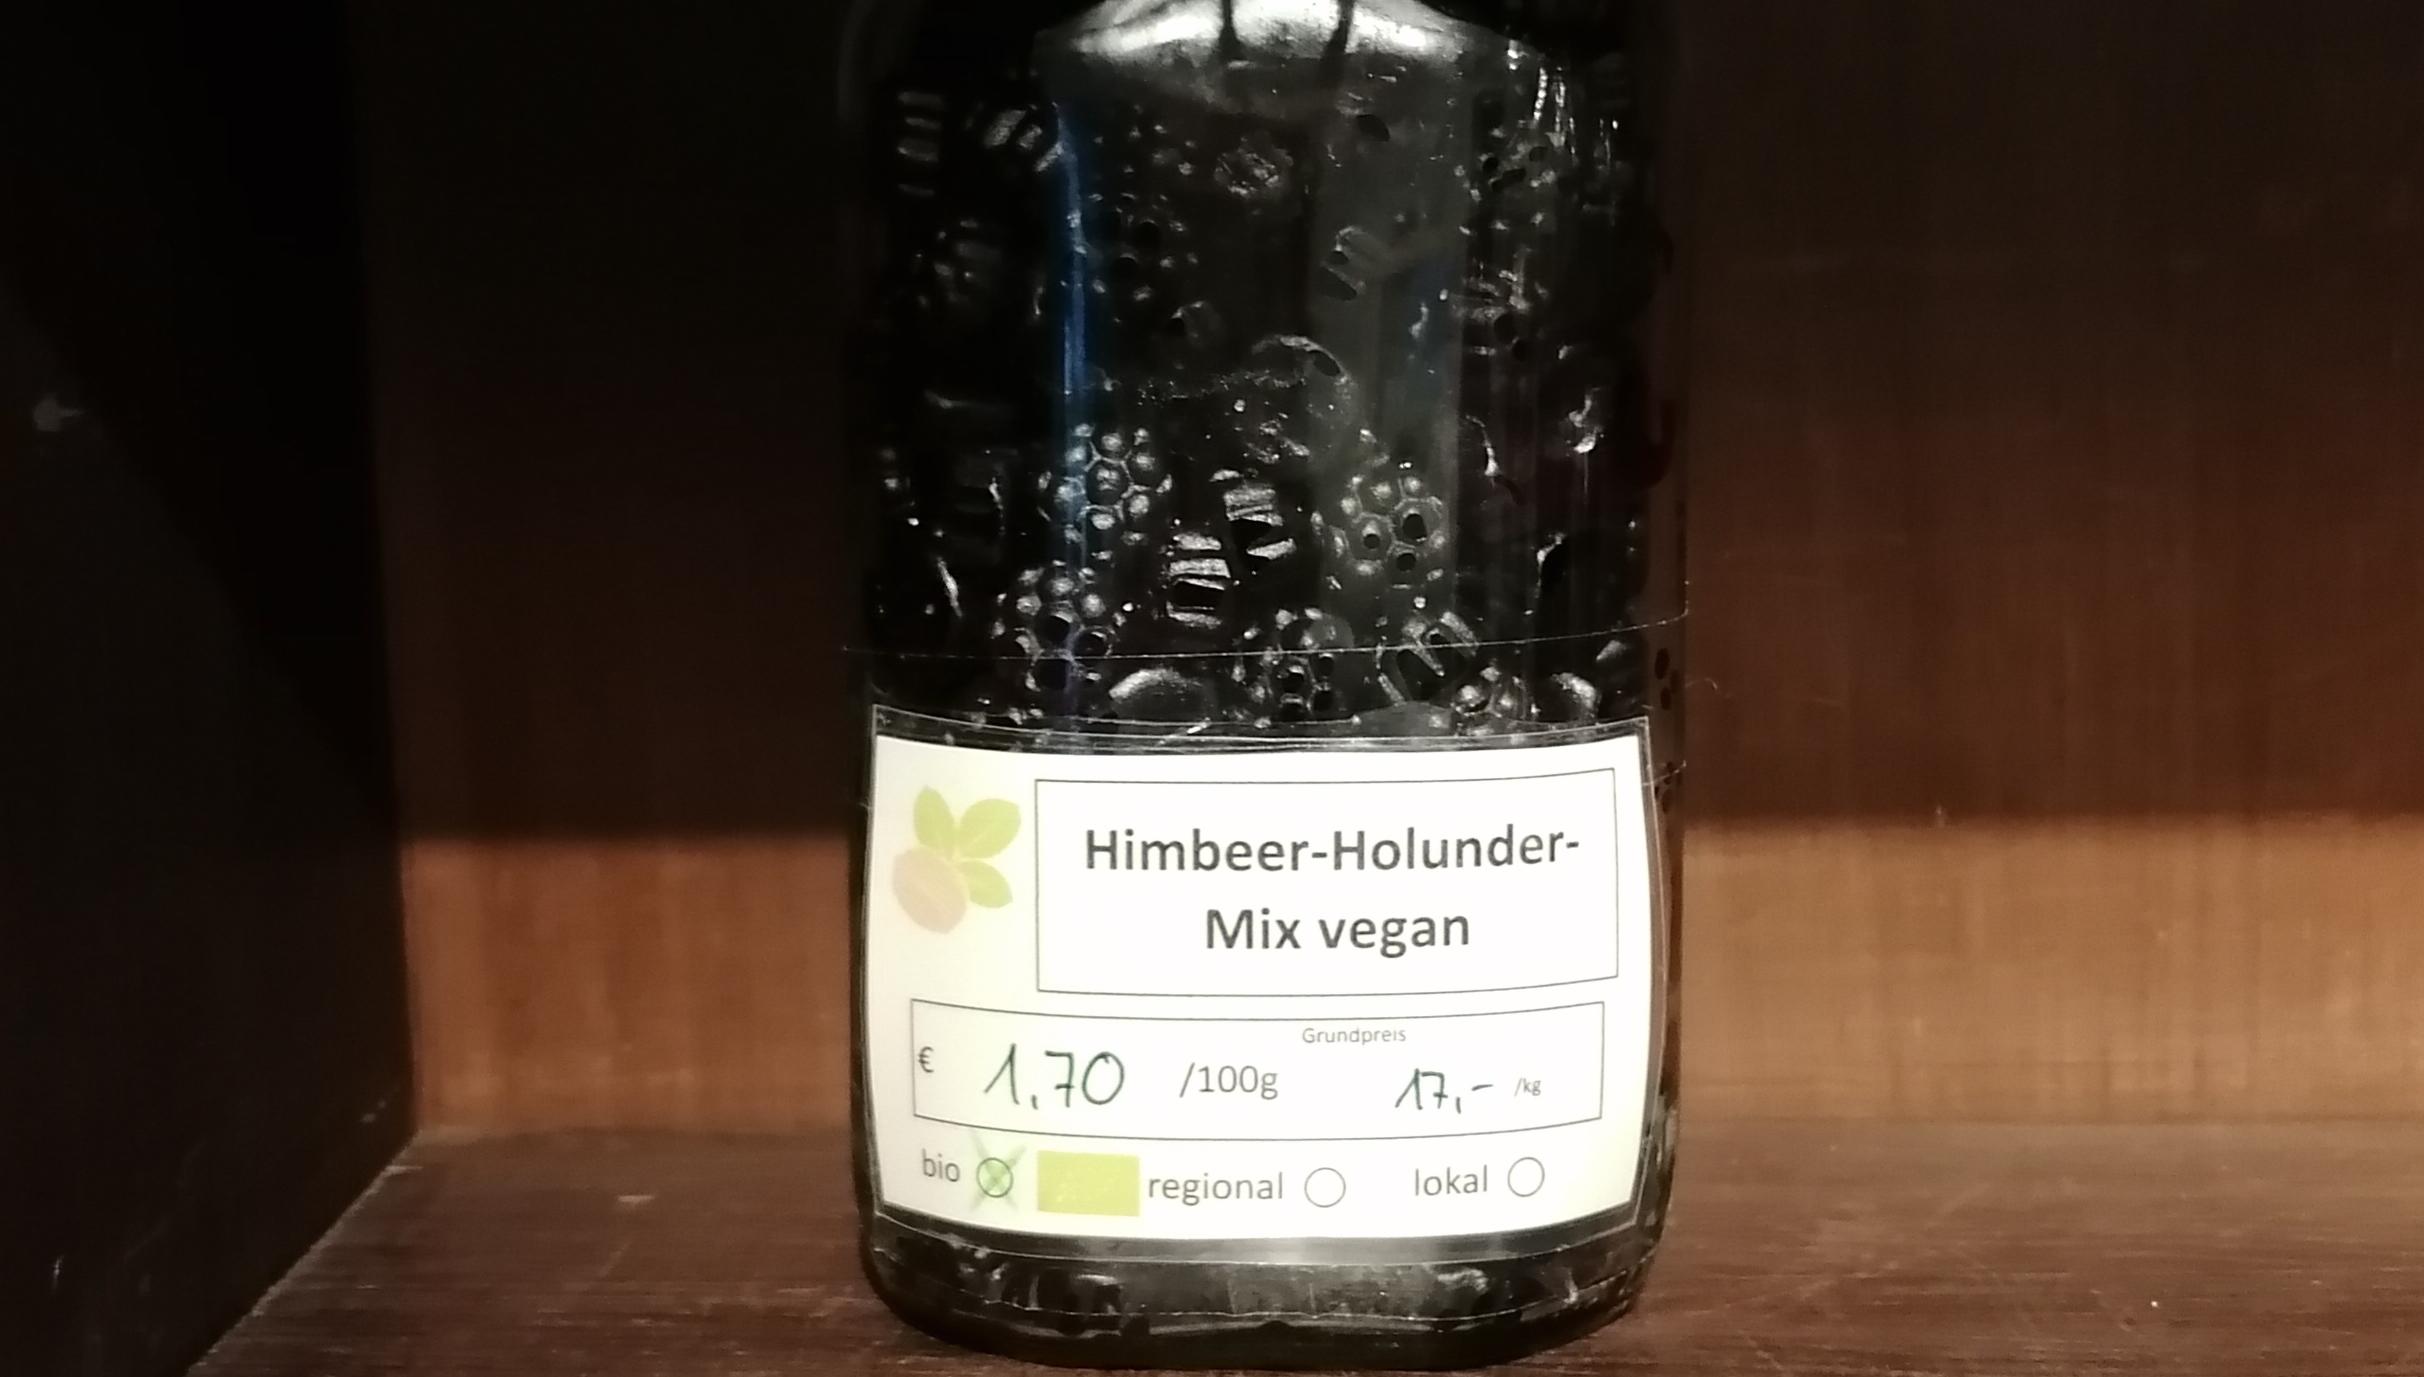 Himbeer-Holunder-Mix vegan